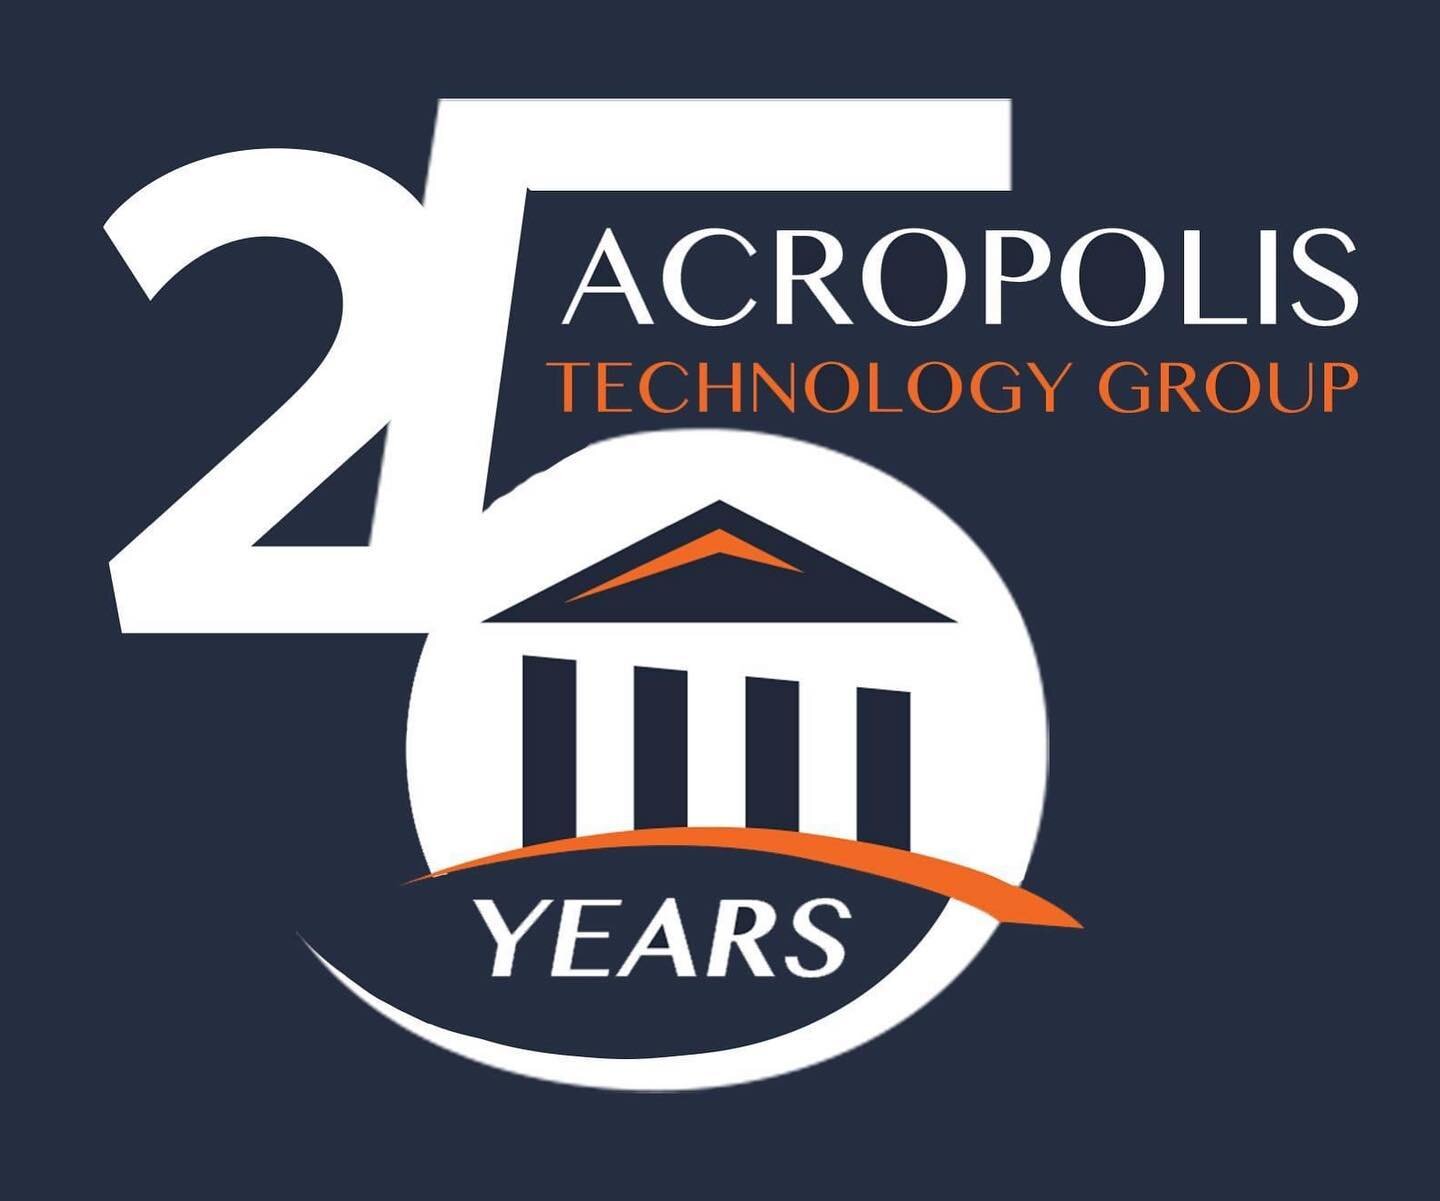 🎉OD真人官网正在庆祝成立25周年! 🎉 
特别感谢OD真人官网出色的客户和员工让这个地方如此棒. 为更多的人干杯! 🥂 
#25年的商业#acropolistech #强大#新标志